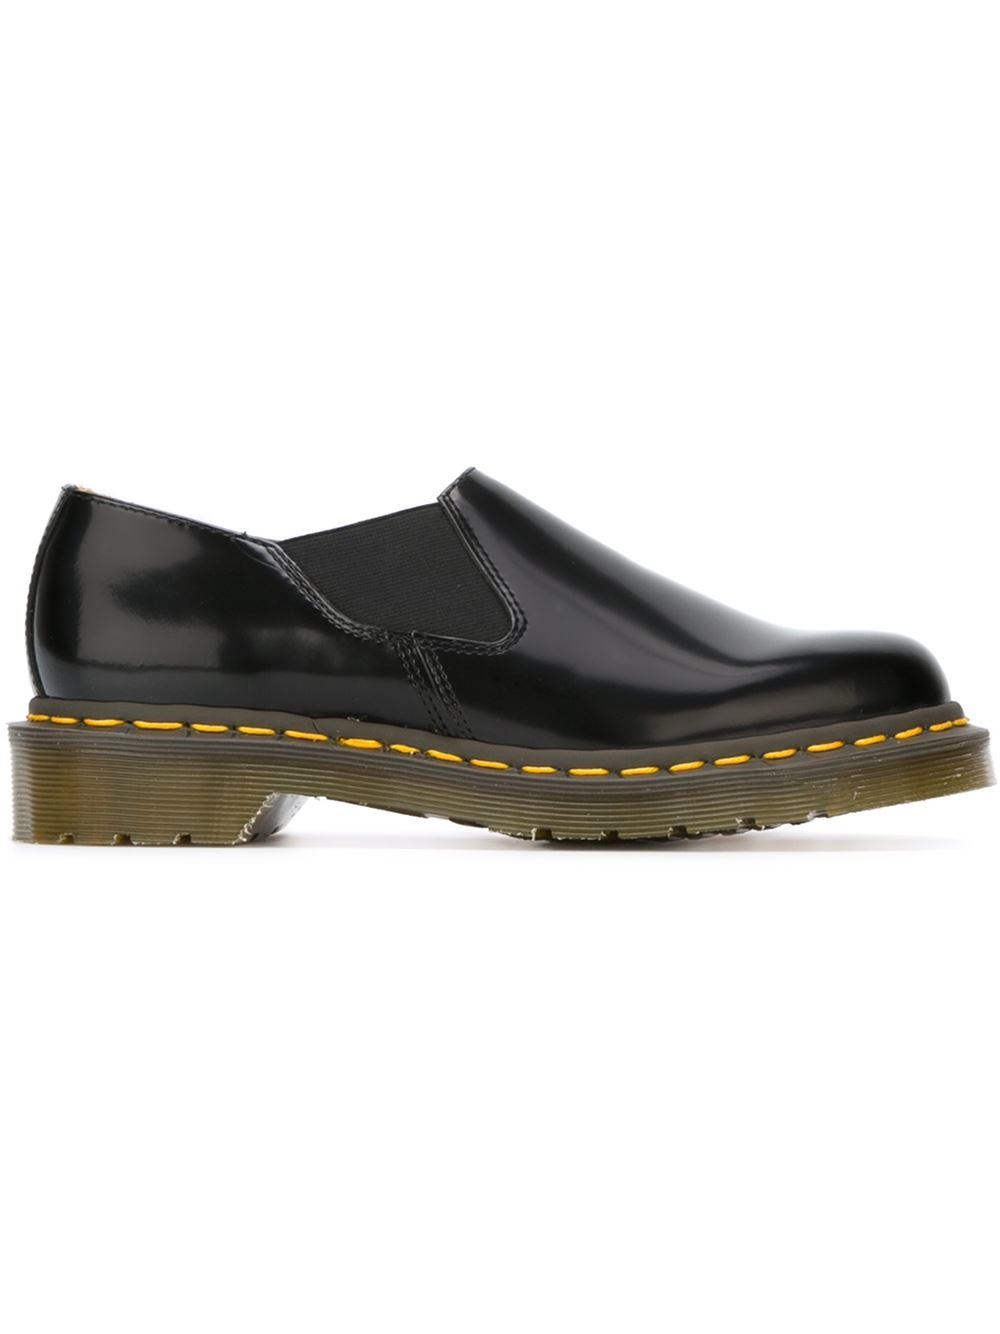 Comme des garçons Elasticated Patent-Leather Shoes in Black | Lyst